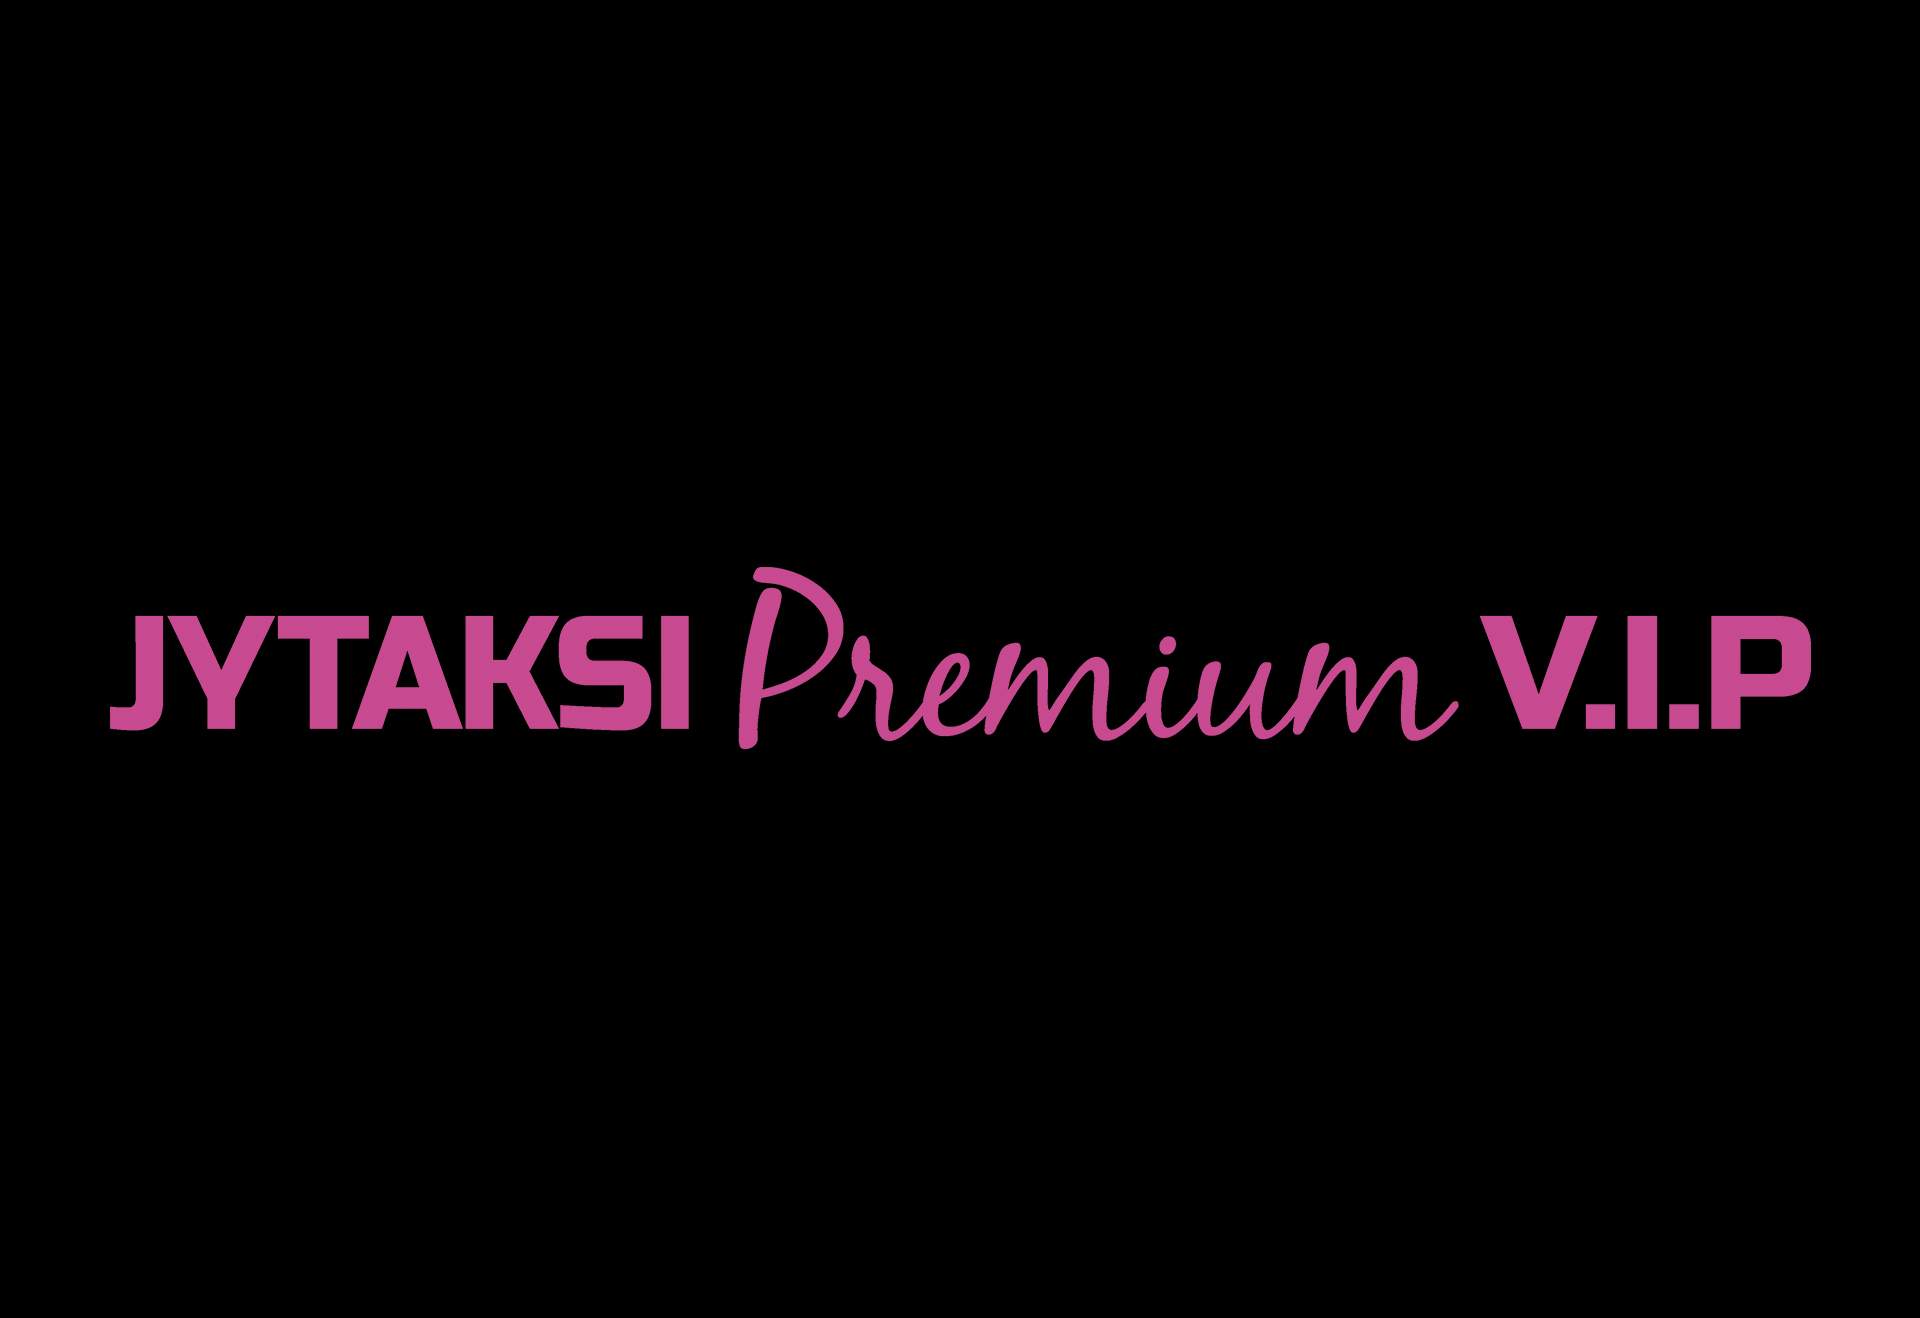 Jytaksi-Premium-logokuva